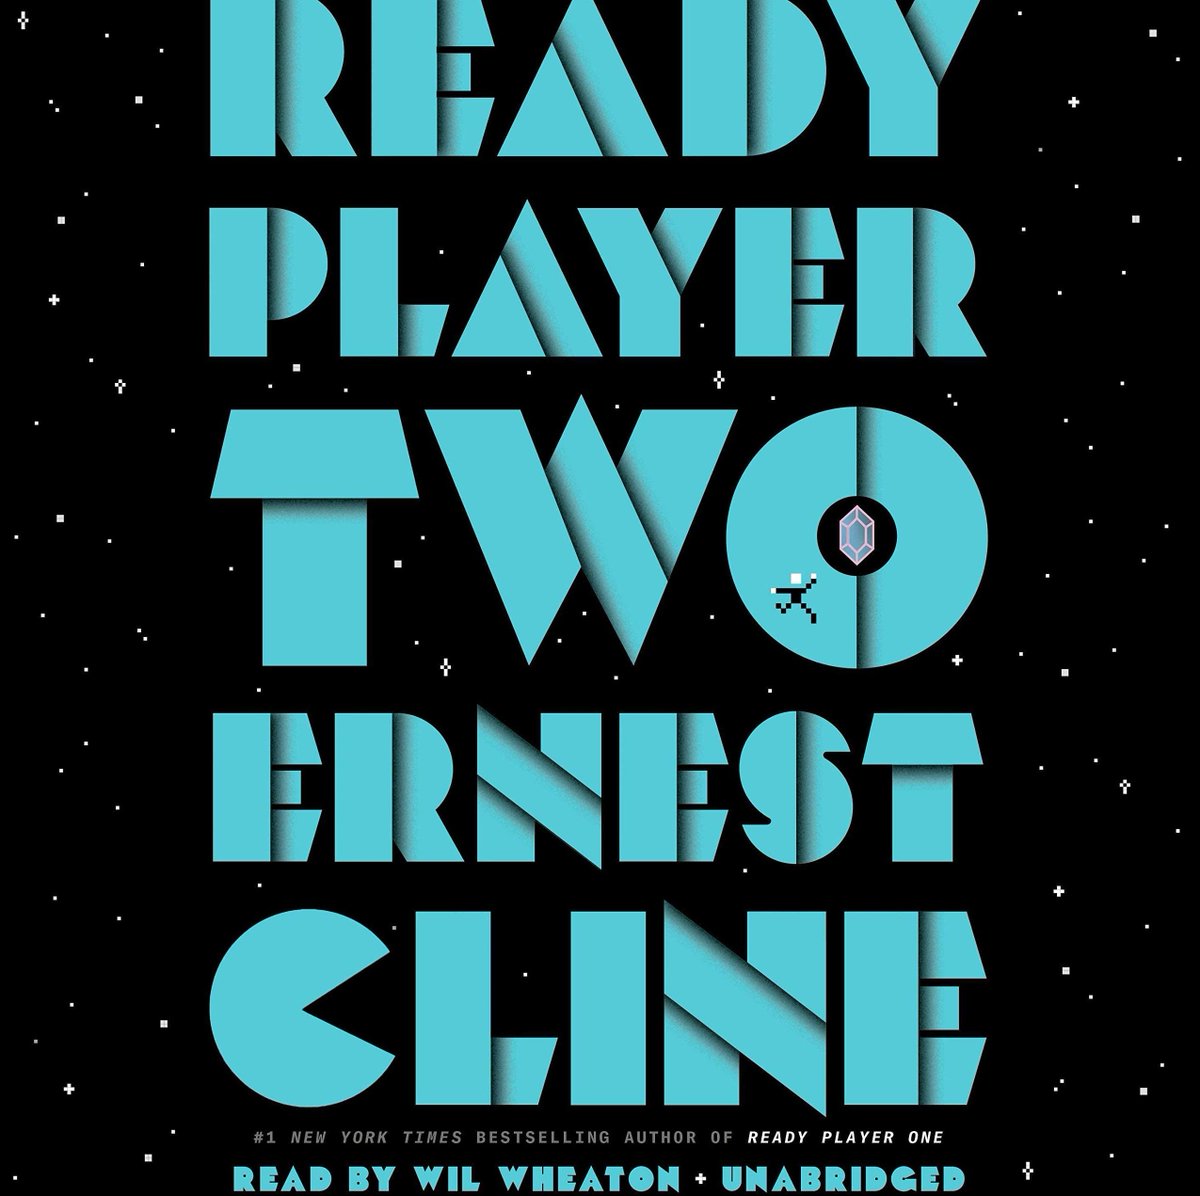 Ready Player Two: A Novel 7SXSGZU

https://t.co/SgUNsjXK08 https://t.co/dYK2I8XkZJ